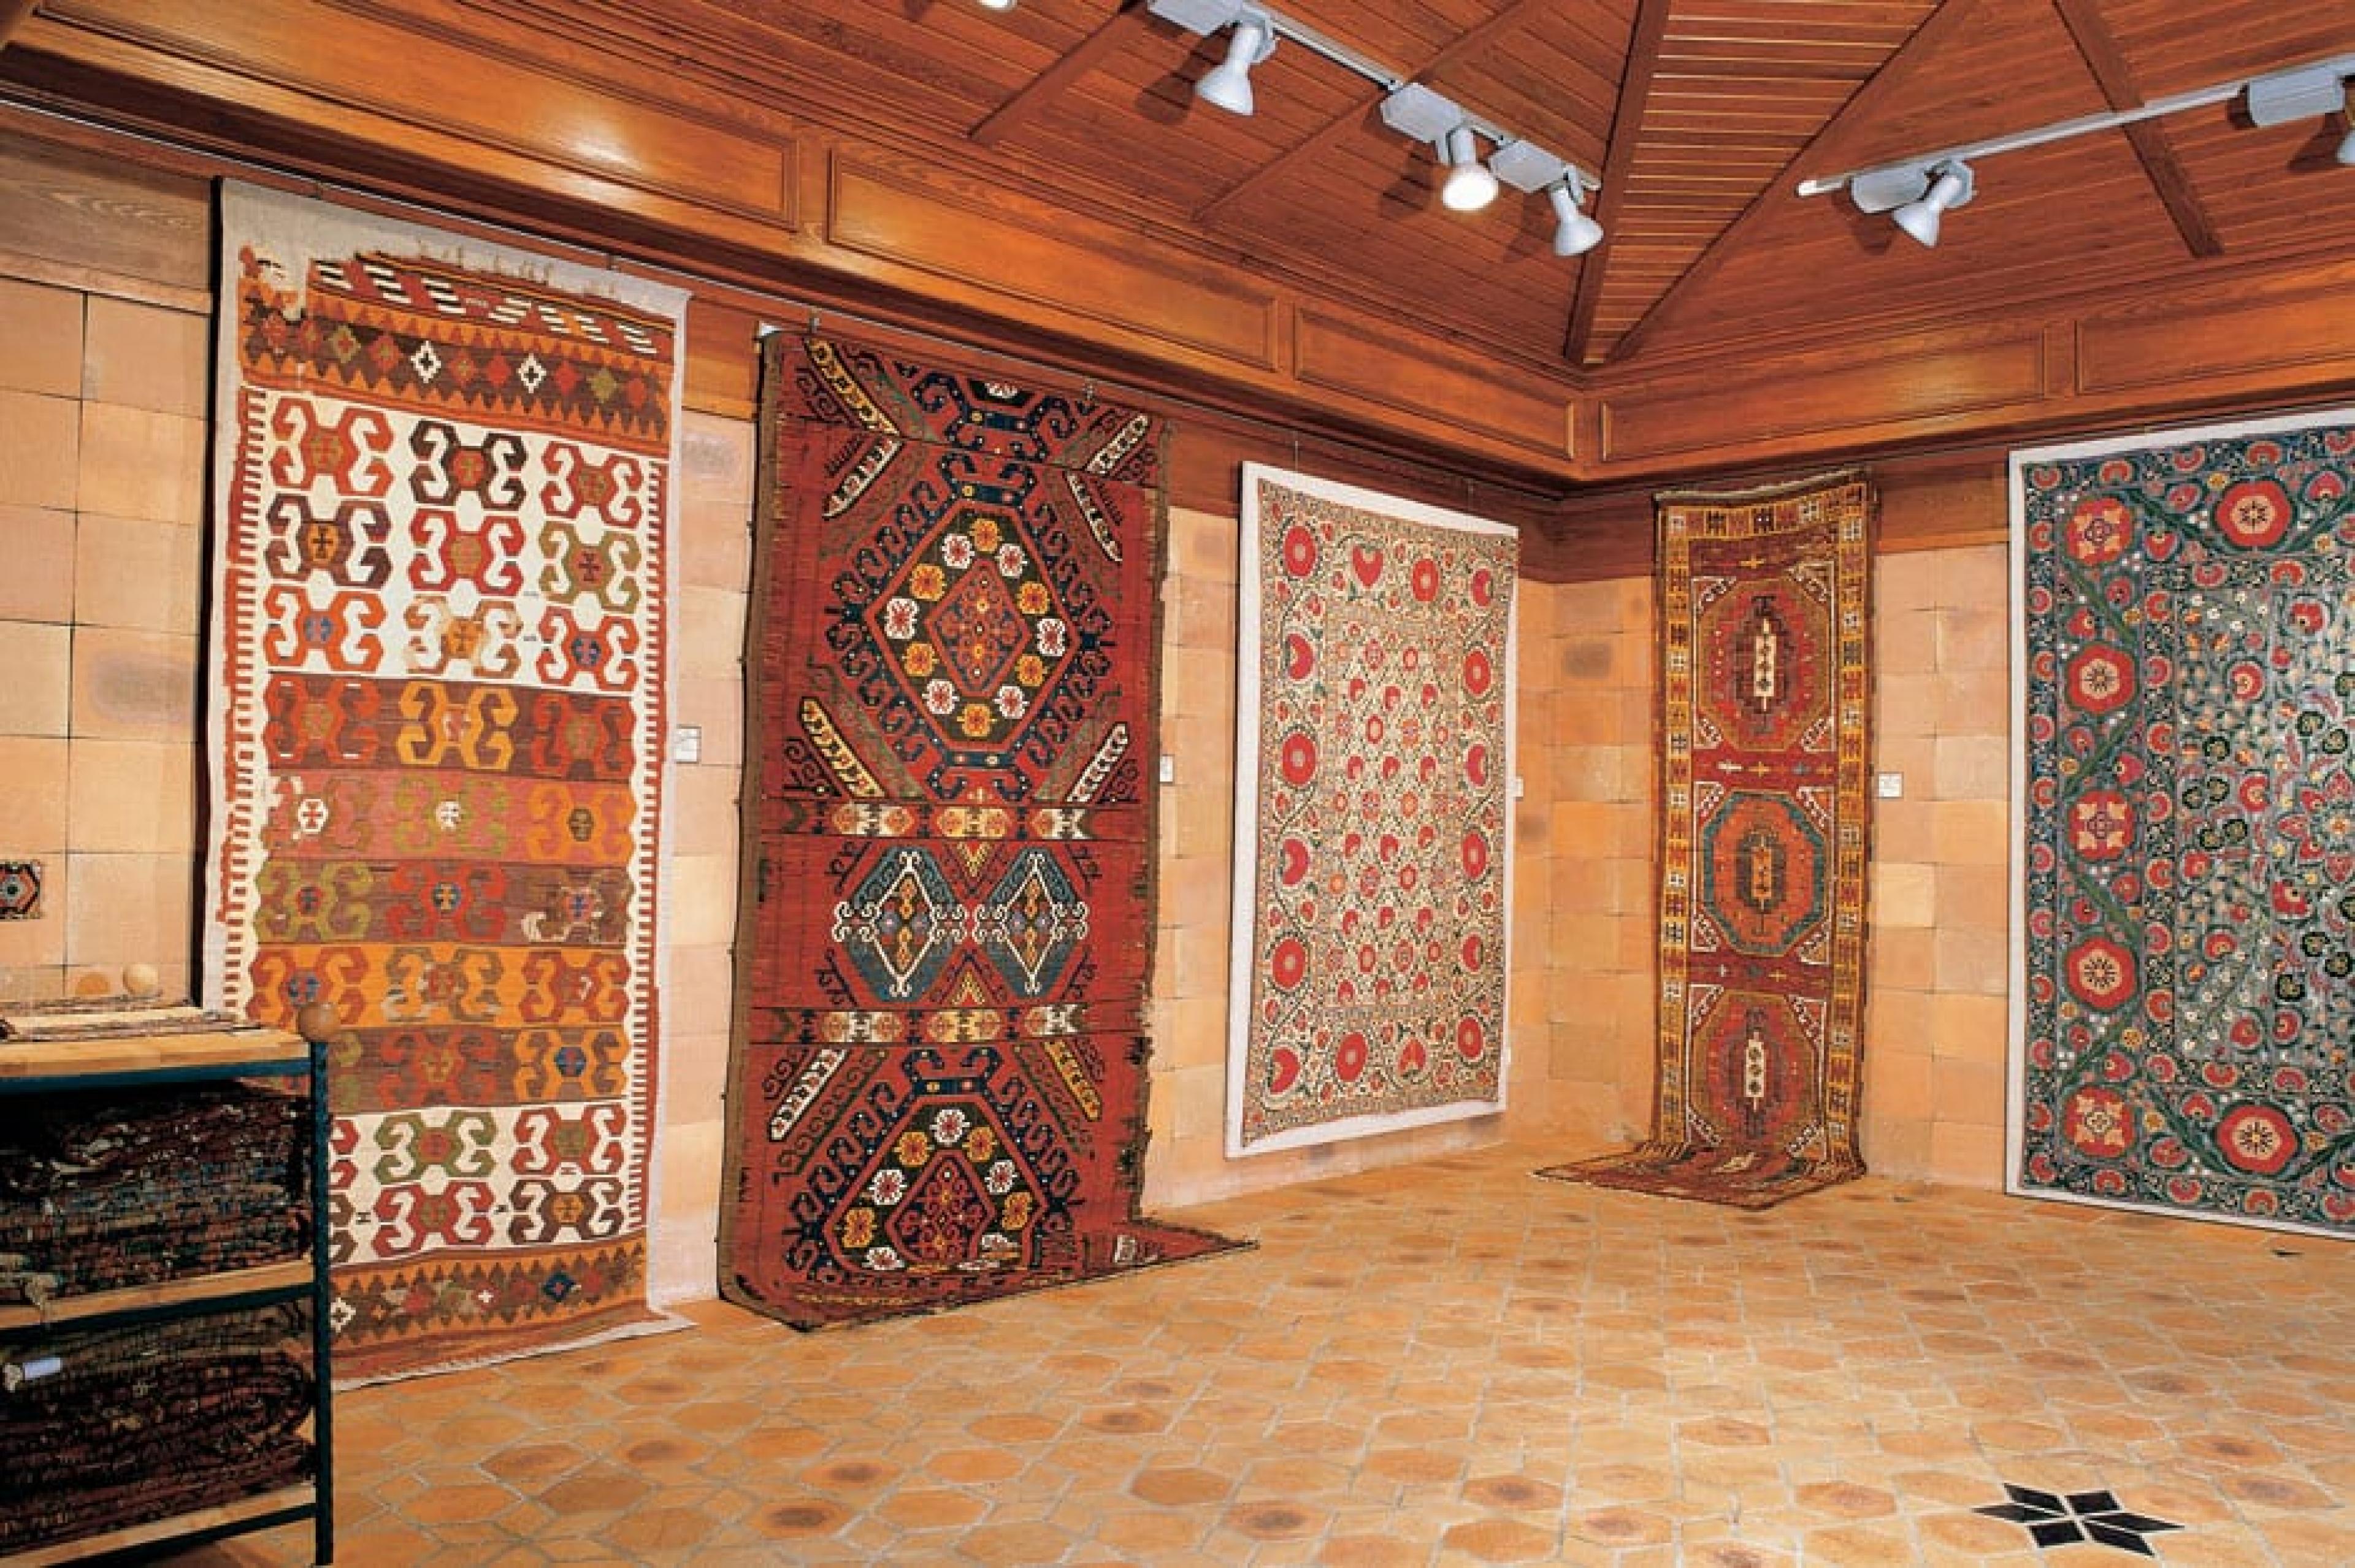 Interior at Mehmet Cetinkaya Gallery, Istanbul, Turkey